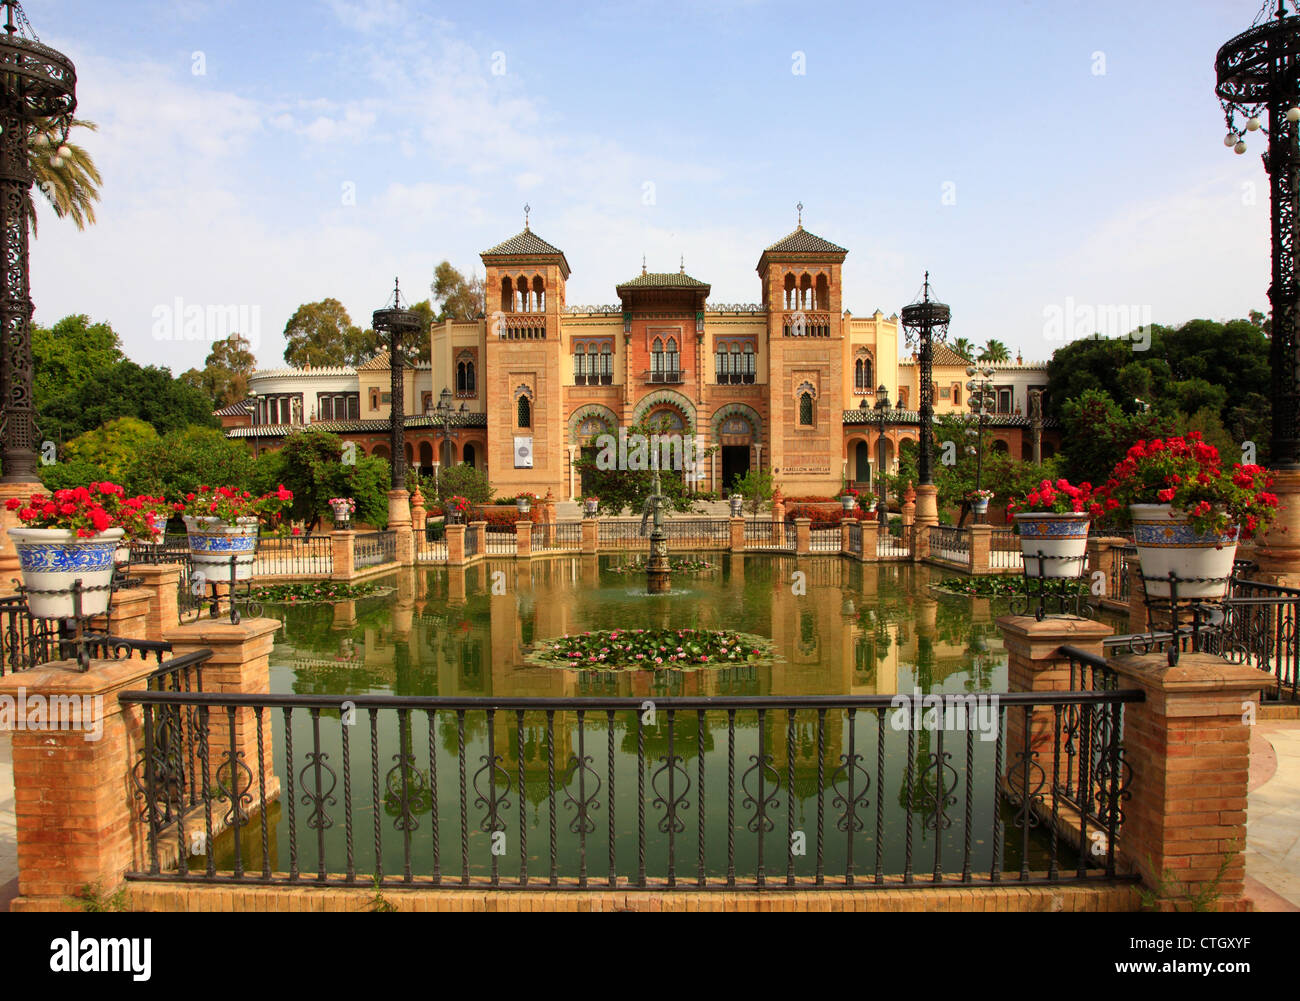 Spain, Andalusia, Seville, Museo de las Artes y Costumbres Populares, Stock Photo